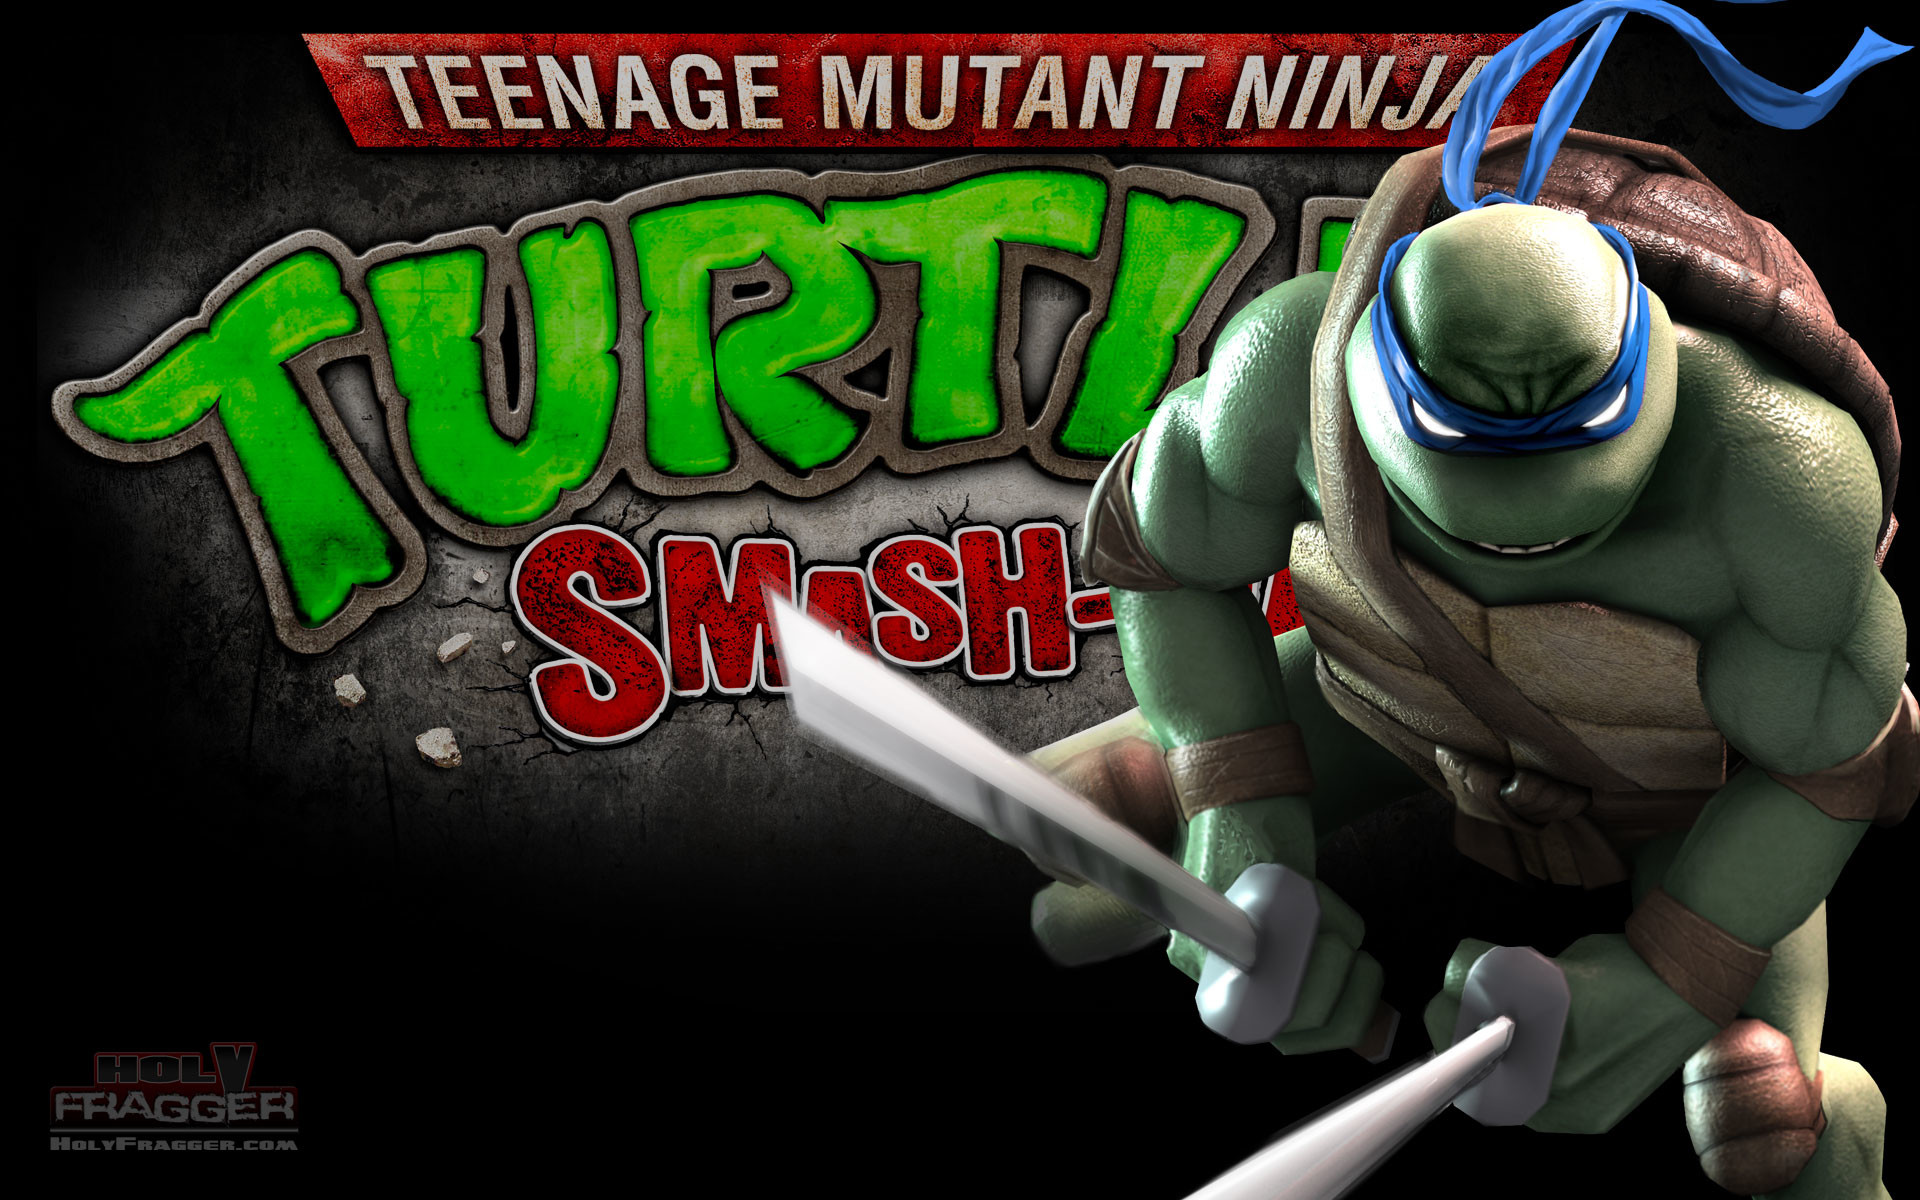 1920x1200 Of Teenage Mutant Ninja Turtles Smash Up Background Image for iOS 7